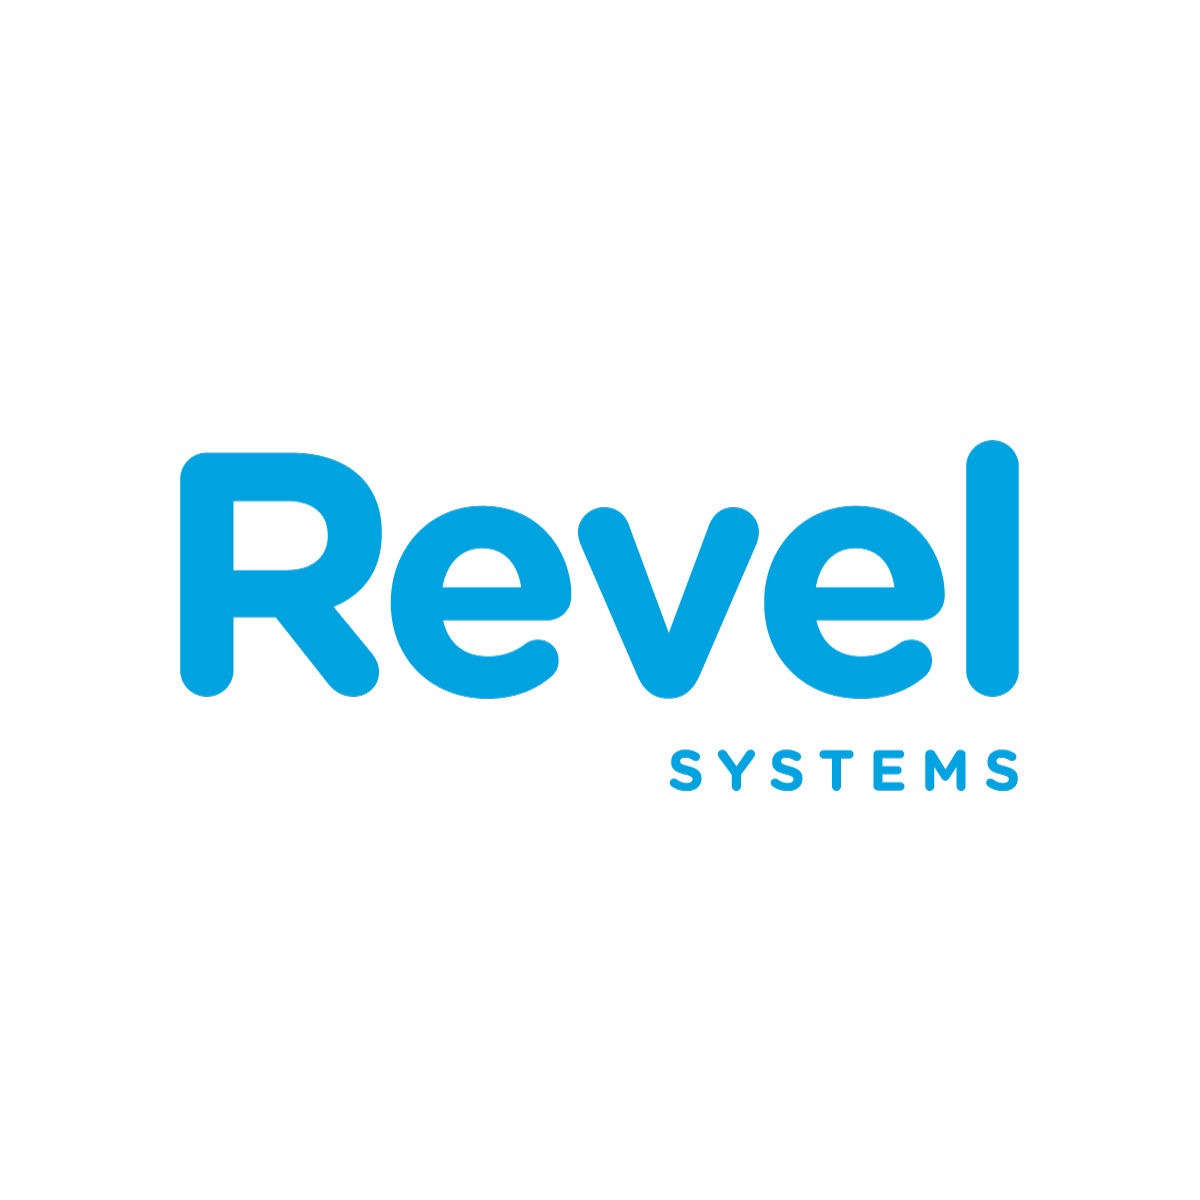 Revel Systems Logo for active job listings